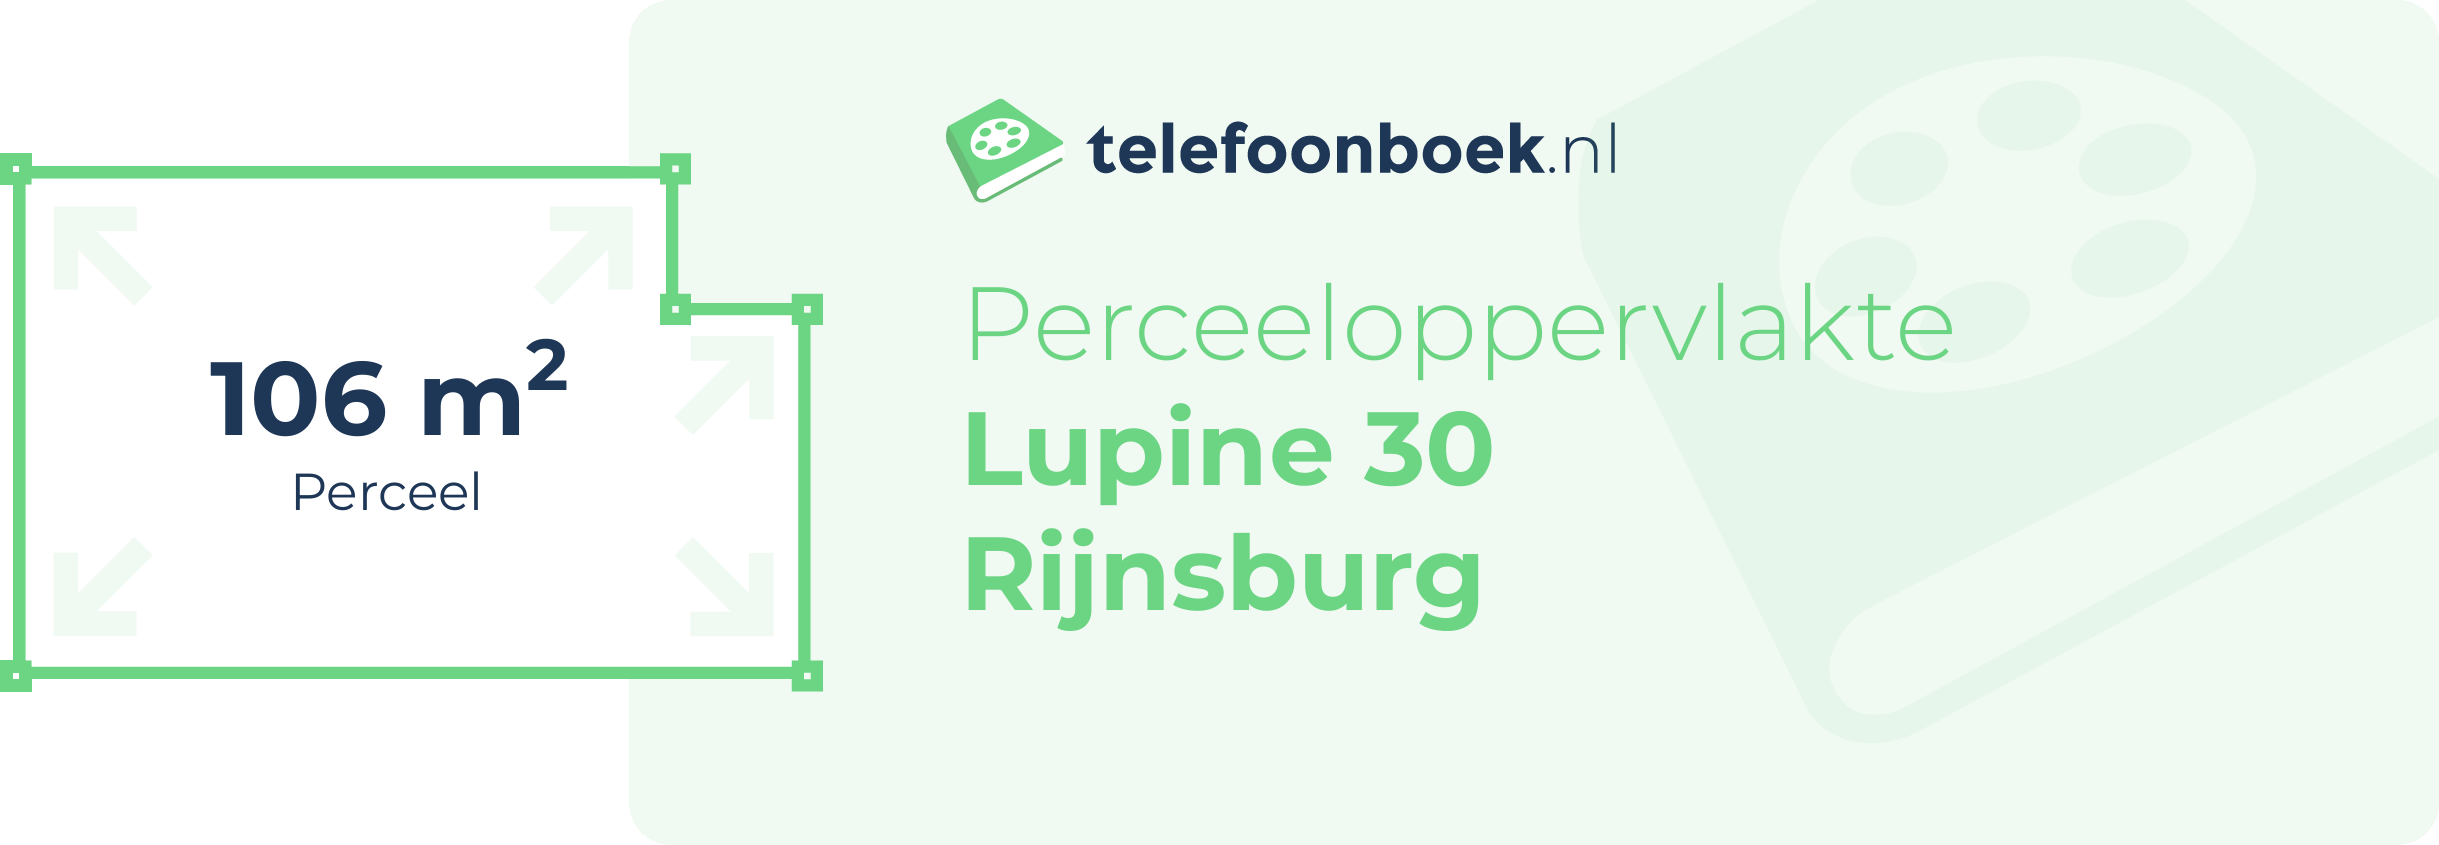 Perceeloppervlakte Lupine 30 Rijnsburg